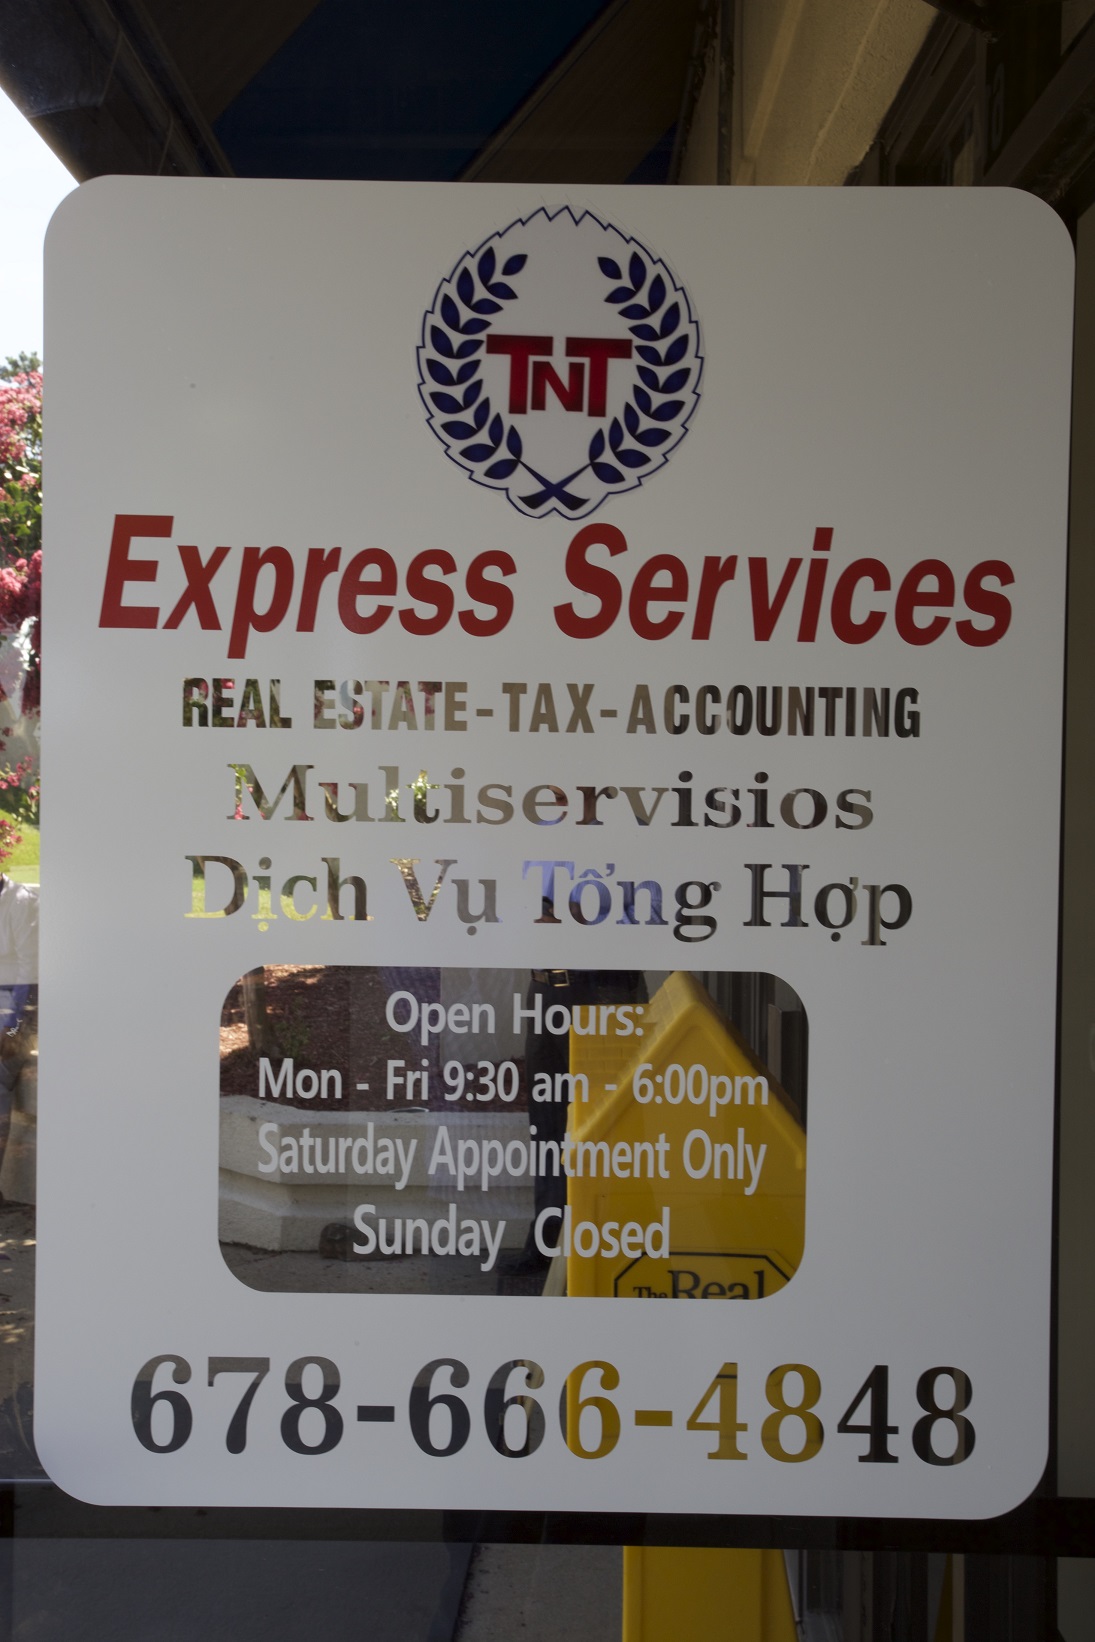 TNT Express Services